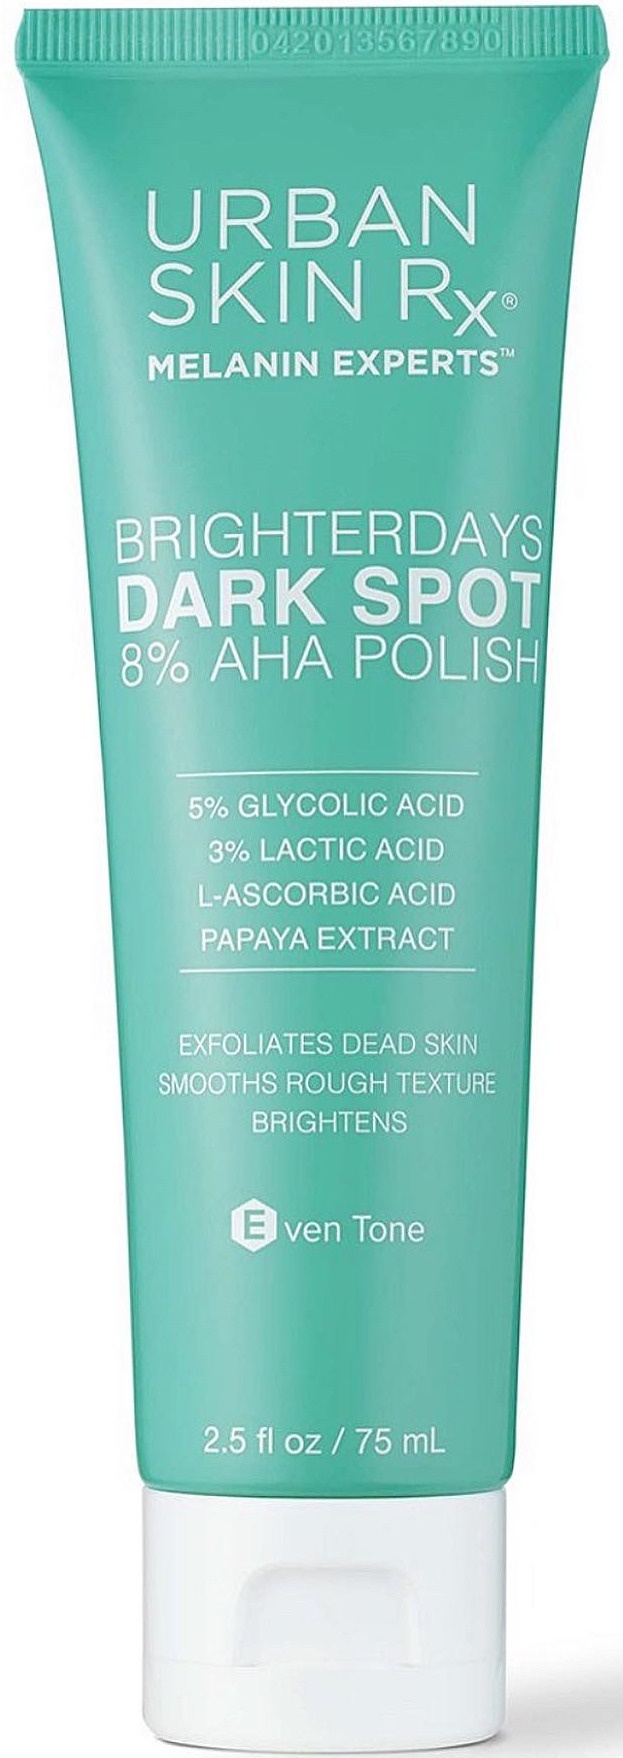 Urban Skin Rx BrighterDays Dark Spot 8% AHA Polish